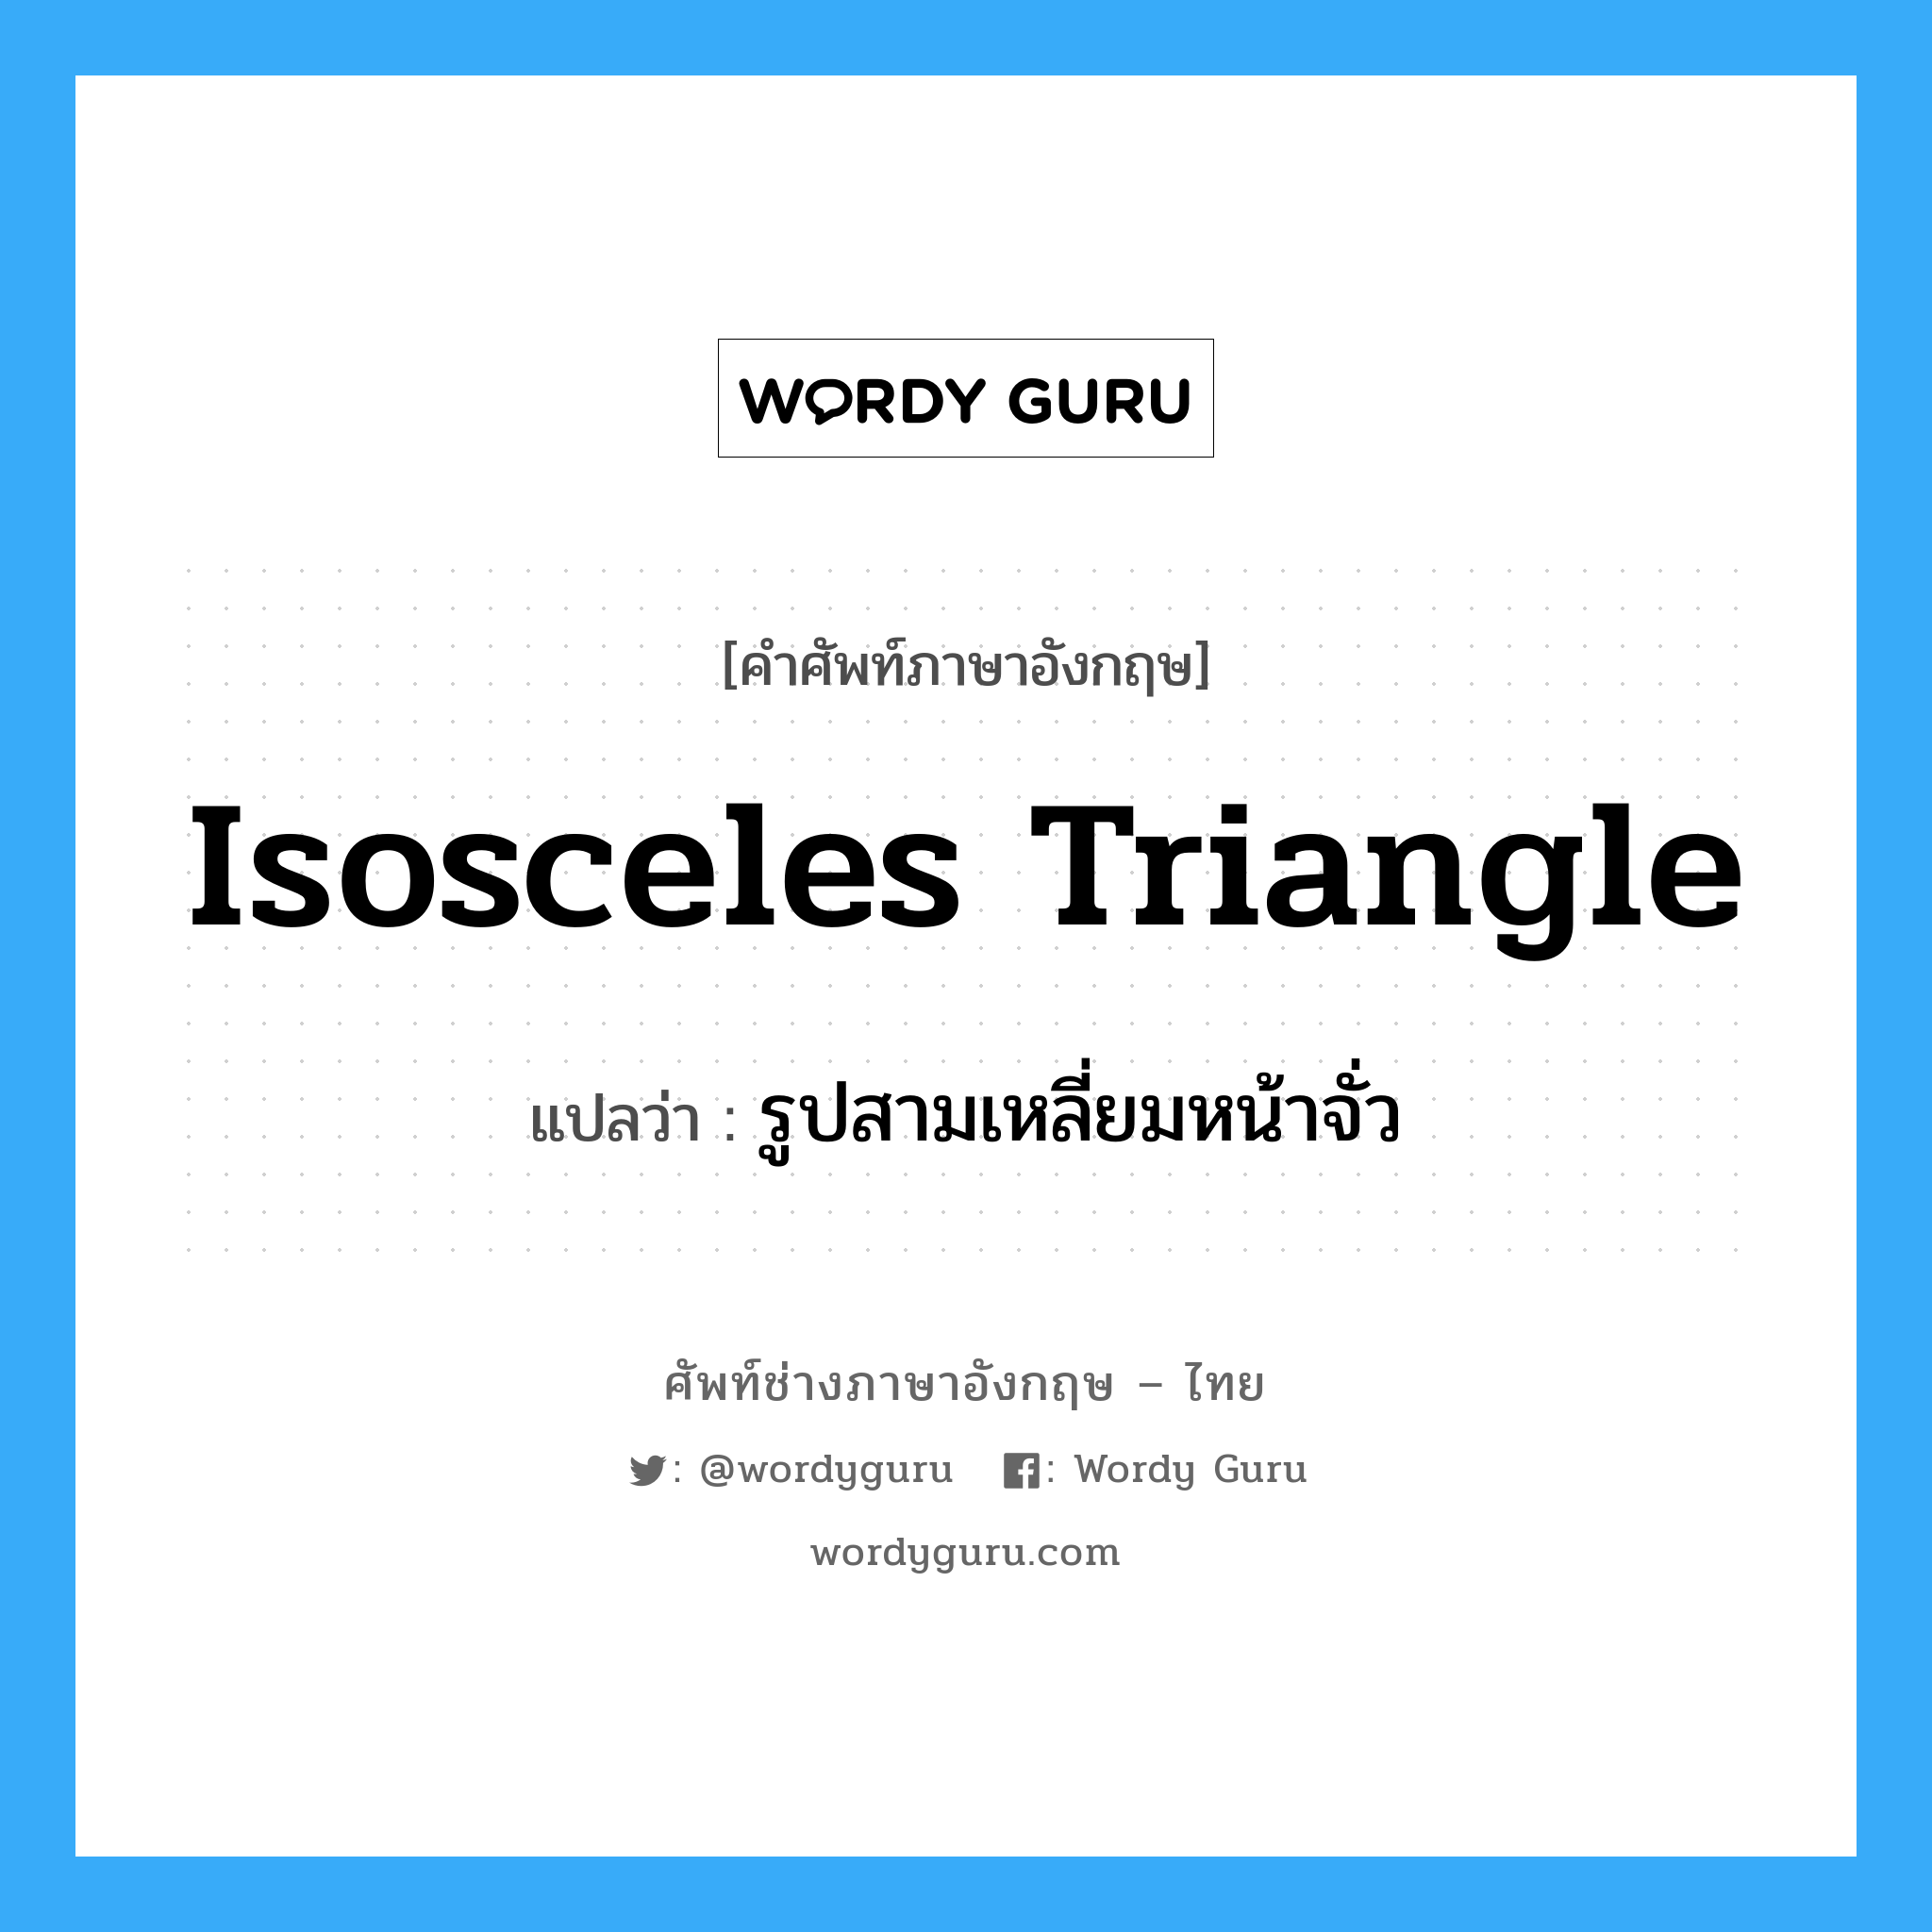 isosceles triangle แปลว่า?, คำศัพท์ช่างภาษาอังกฤษ - ไทย isosceles triangle คำศัพท์ภาษาอังกฤษ isosceles triangle แปลว่า รูปสามเหลี่ยมหน้าจั่ว